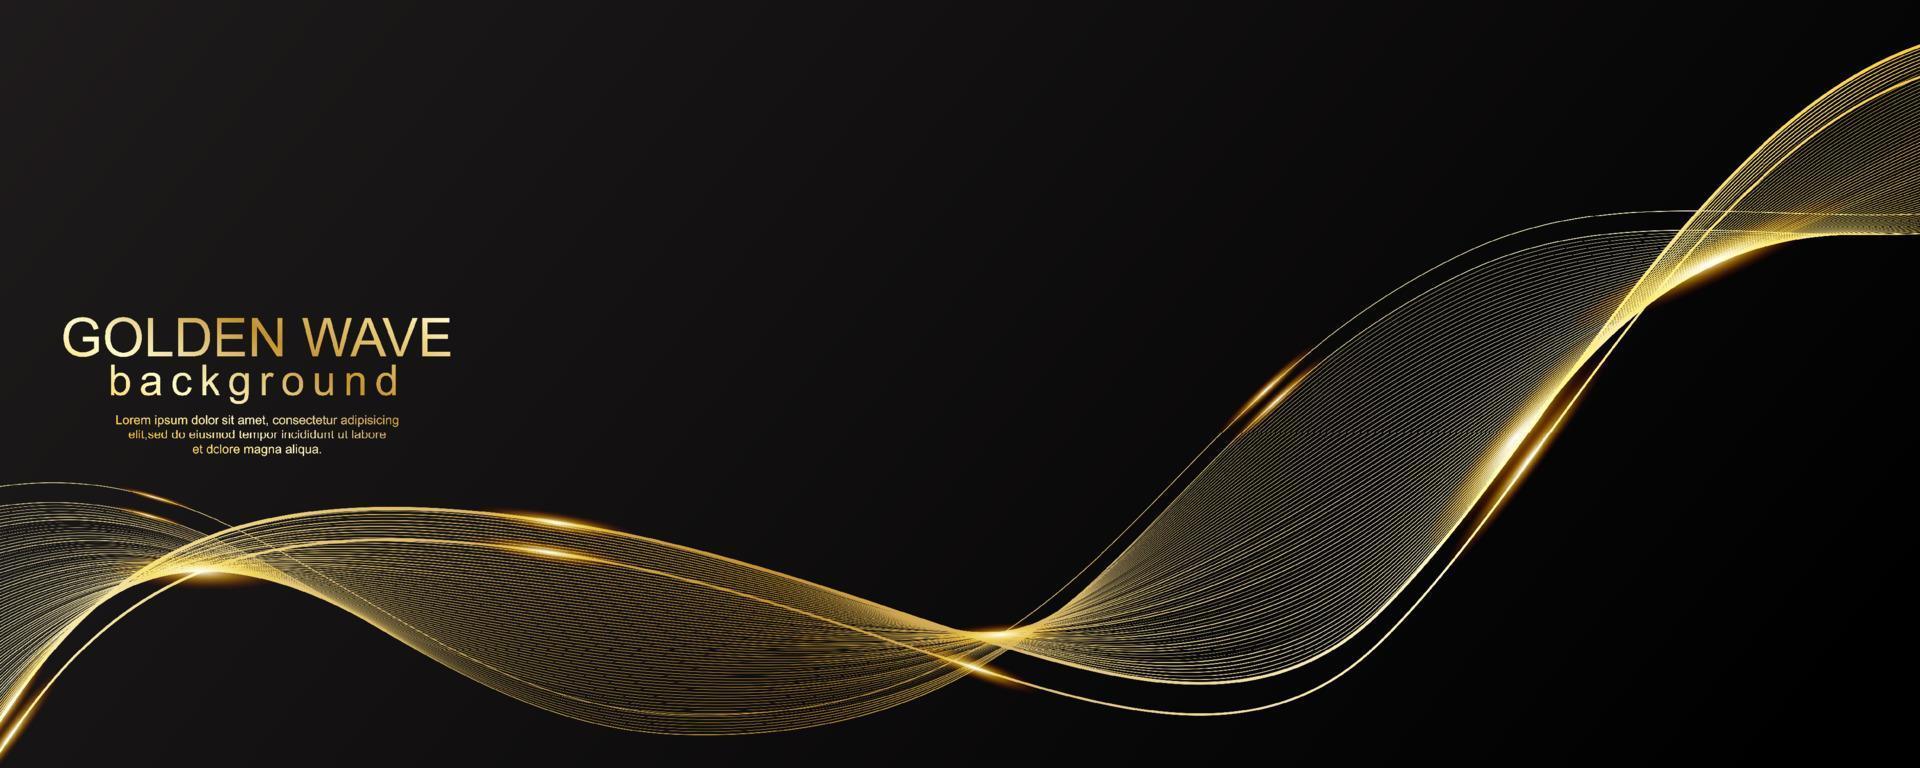 Luxury golden waves design on black background vector